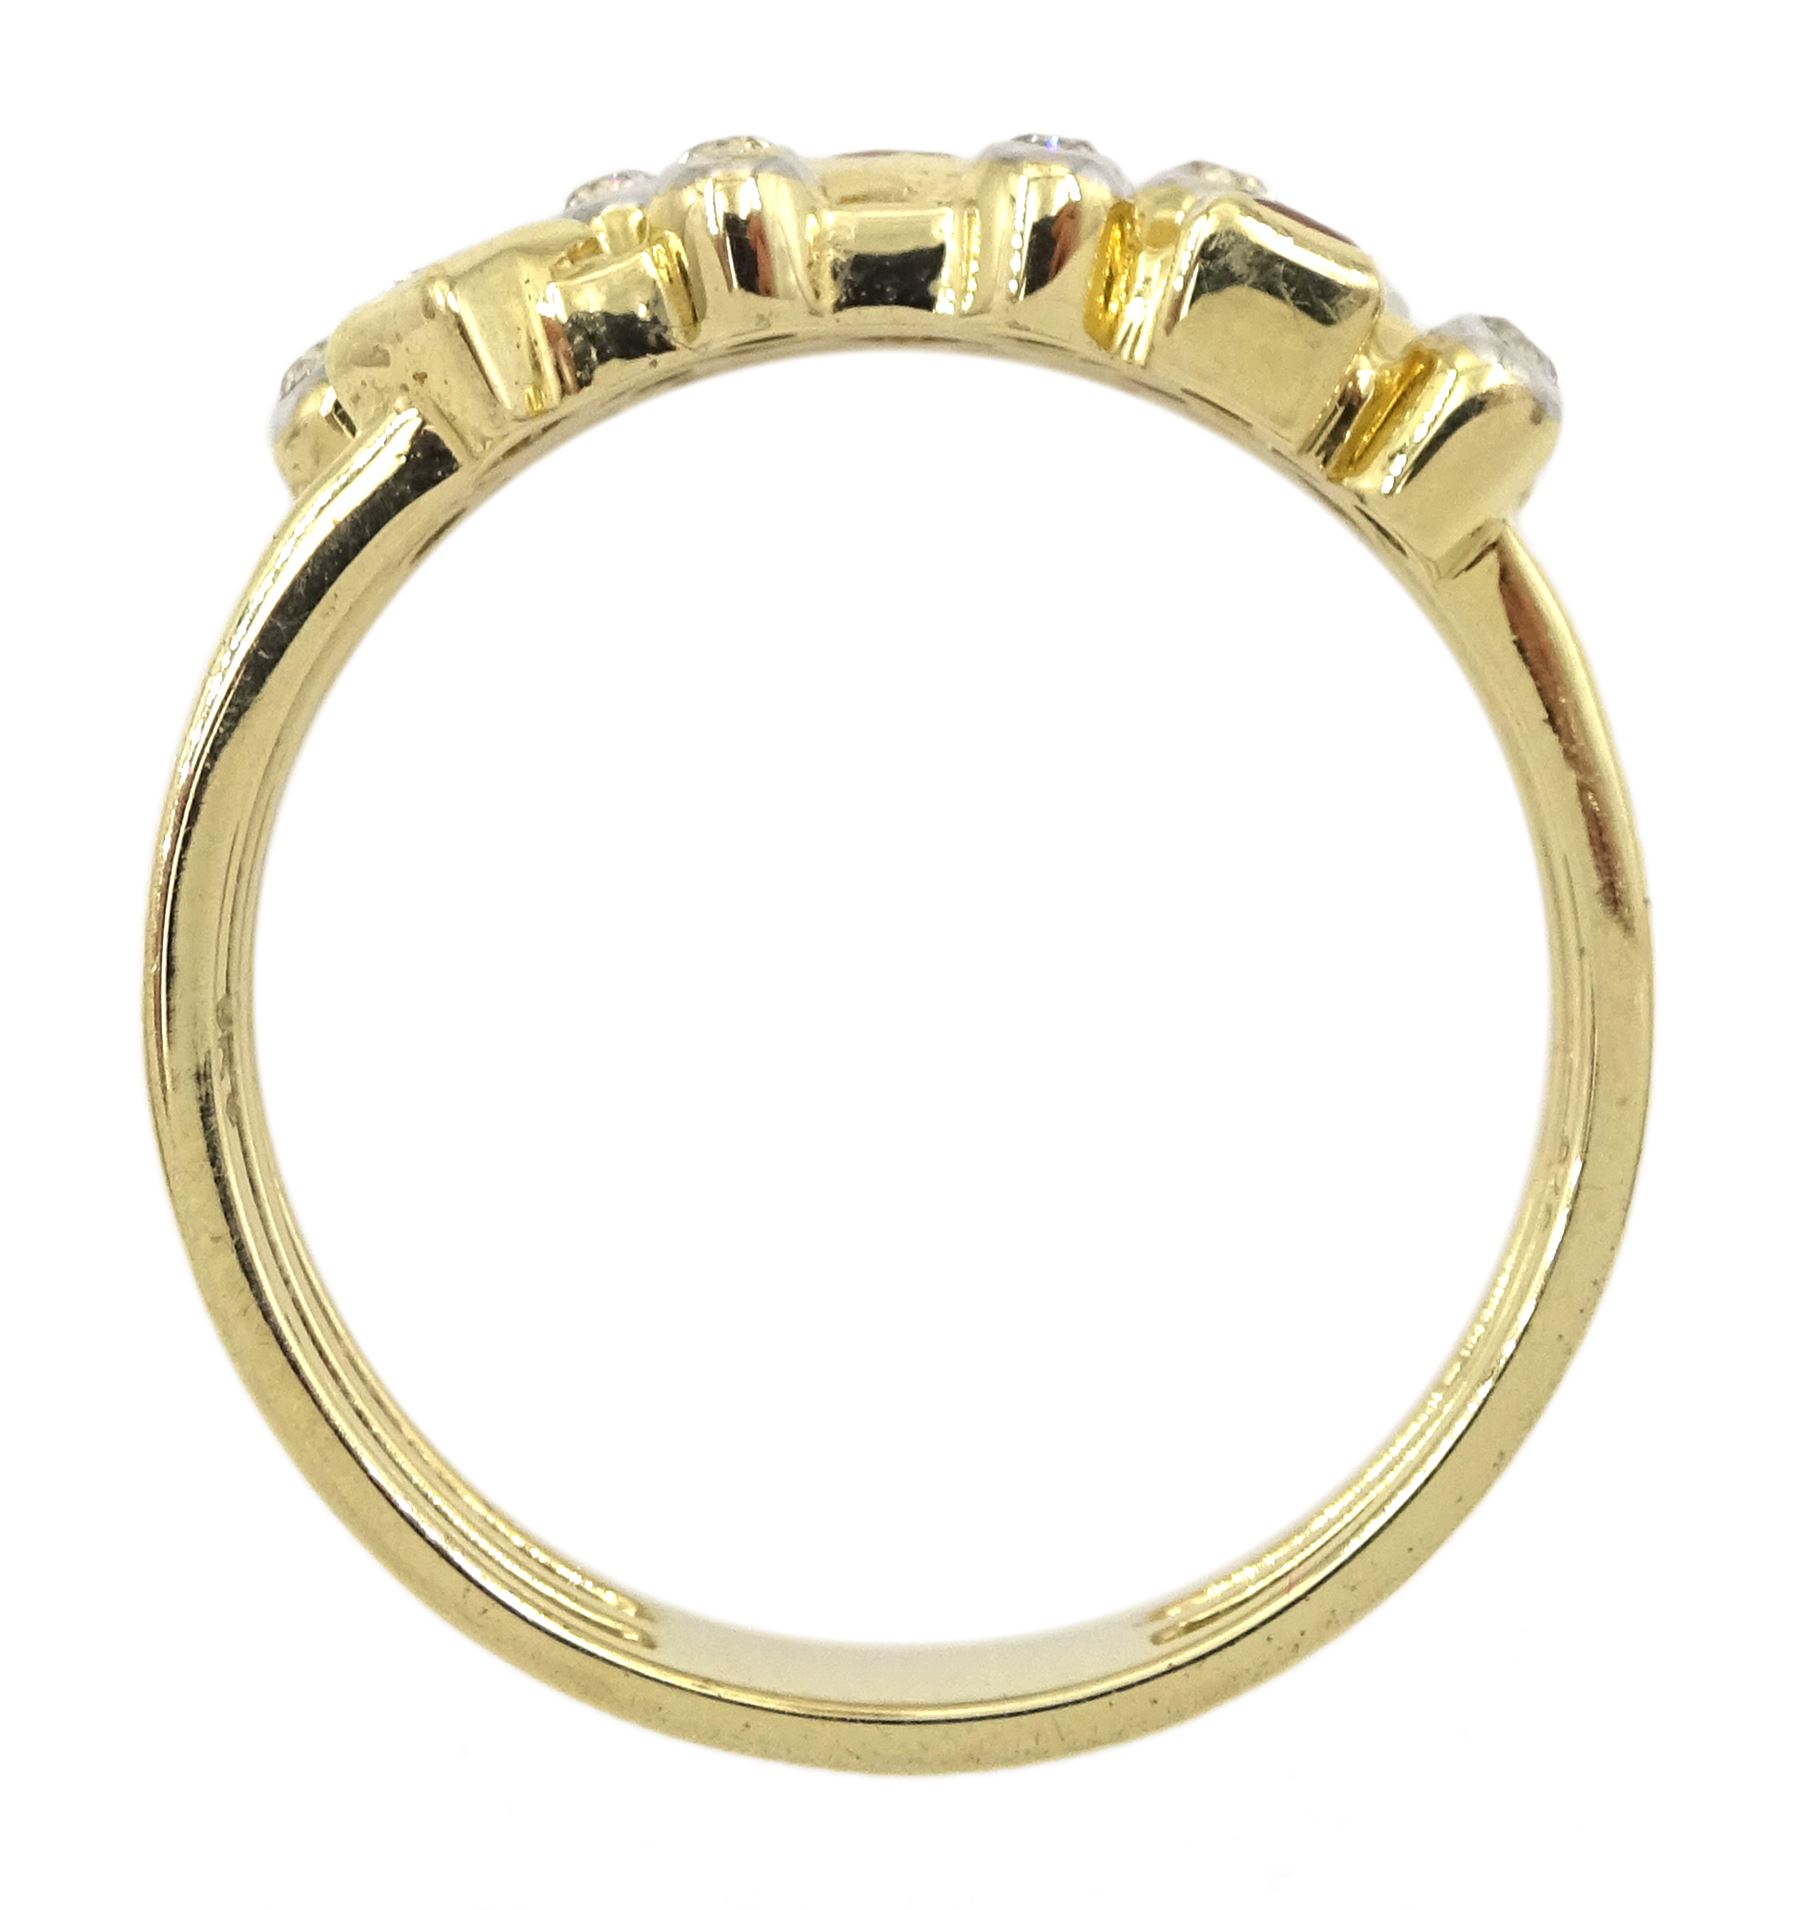 9ct gold square cut orange sapphire and round white zircon three row ring - Image 4 of 4